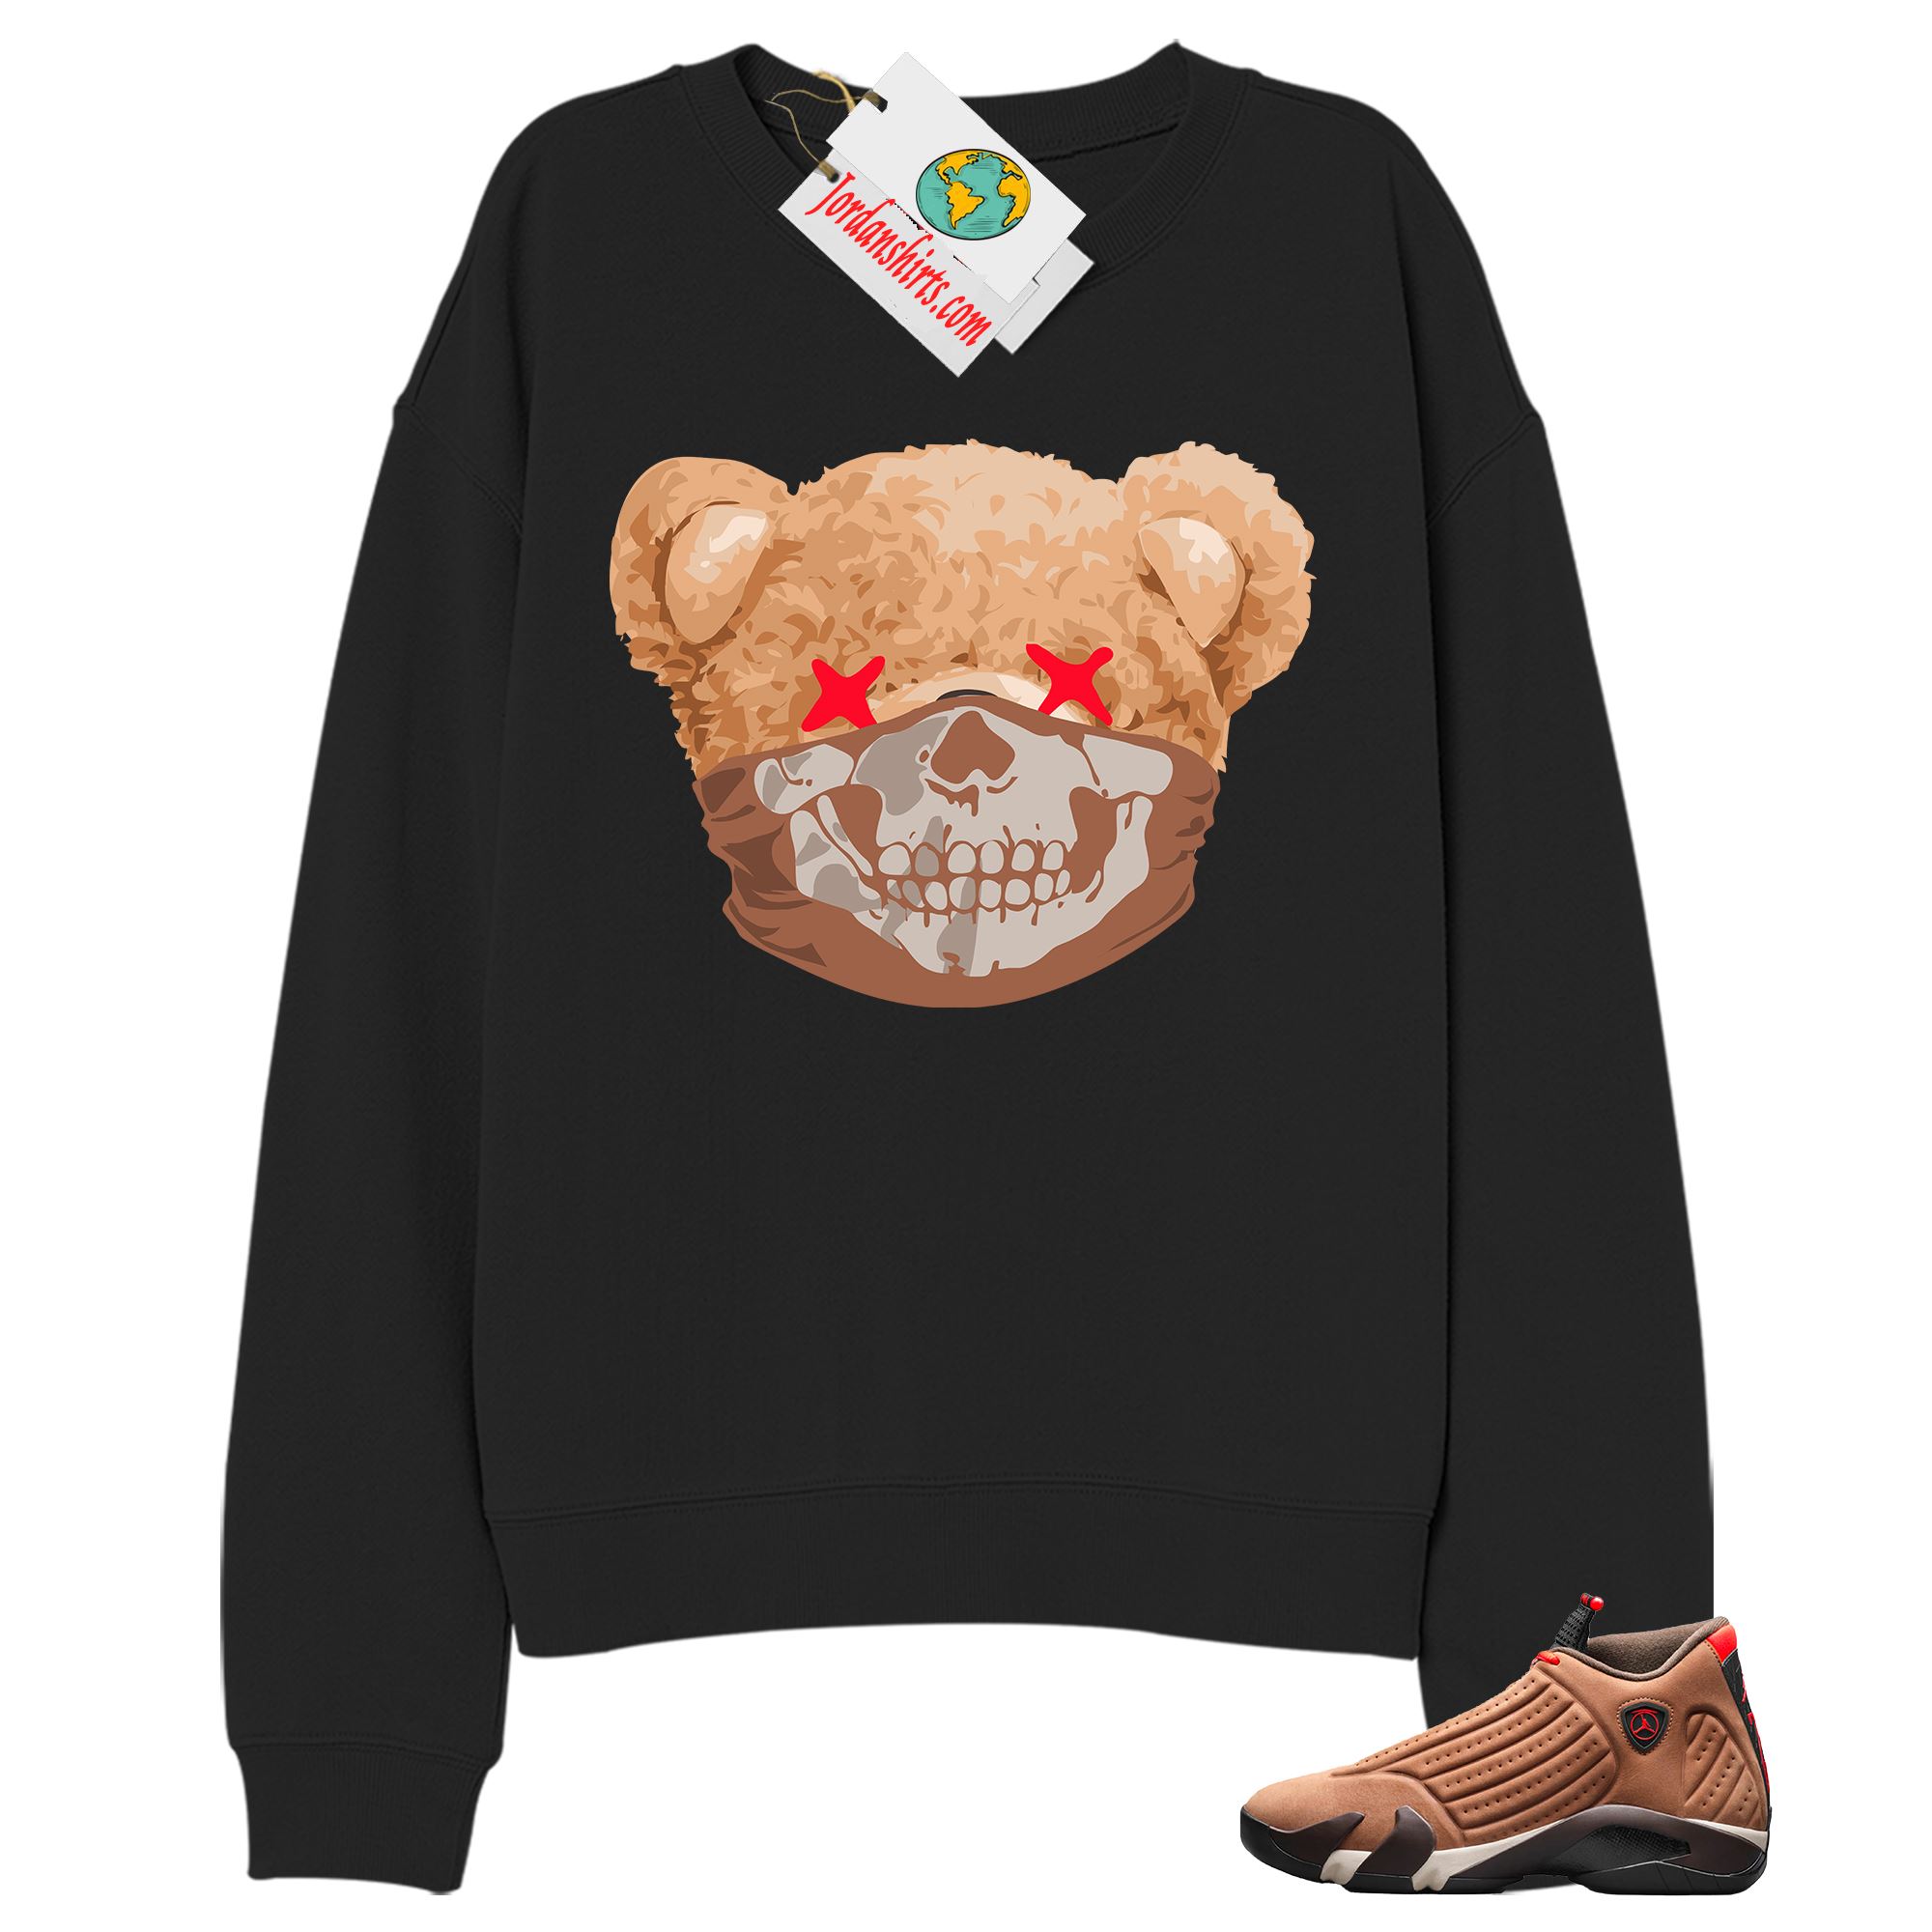 Jordan 14 Sweatshirt, Teddy Bear Skull Bandana Black Sweatshirt Air Jordan 14 Winterized 14s Size Up To 5xl